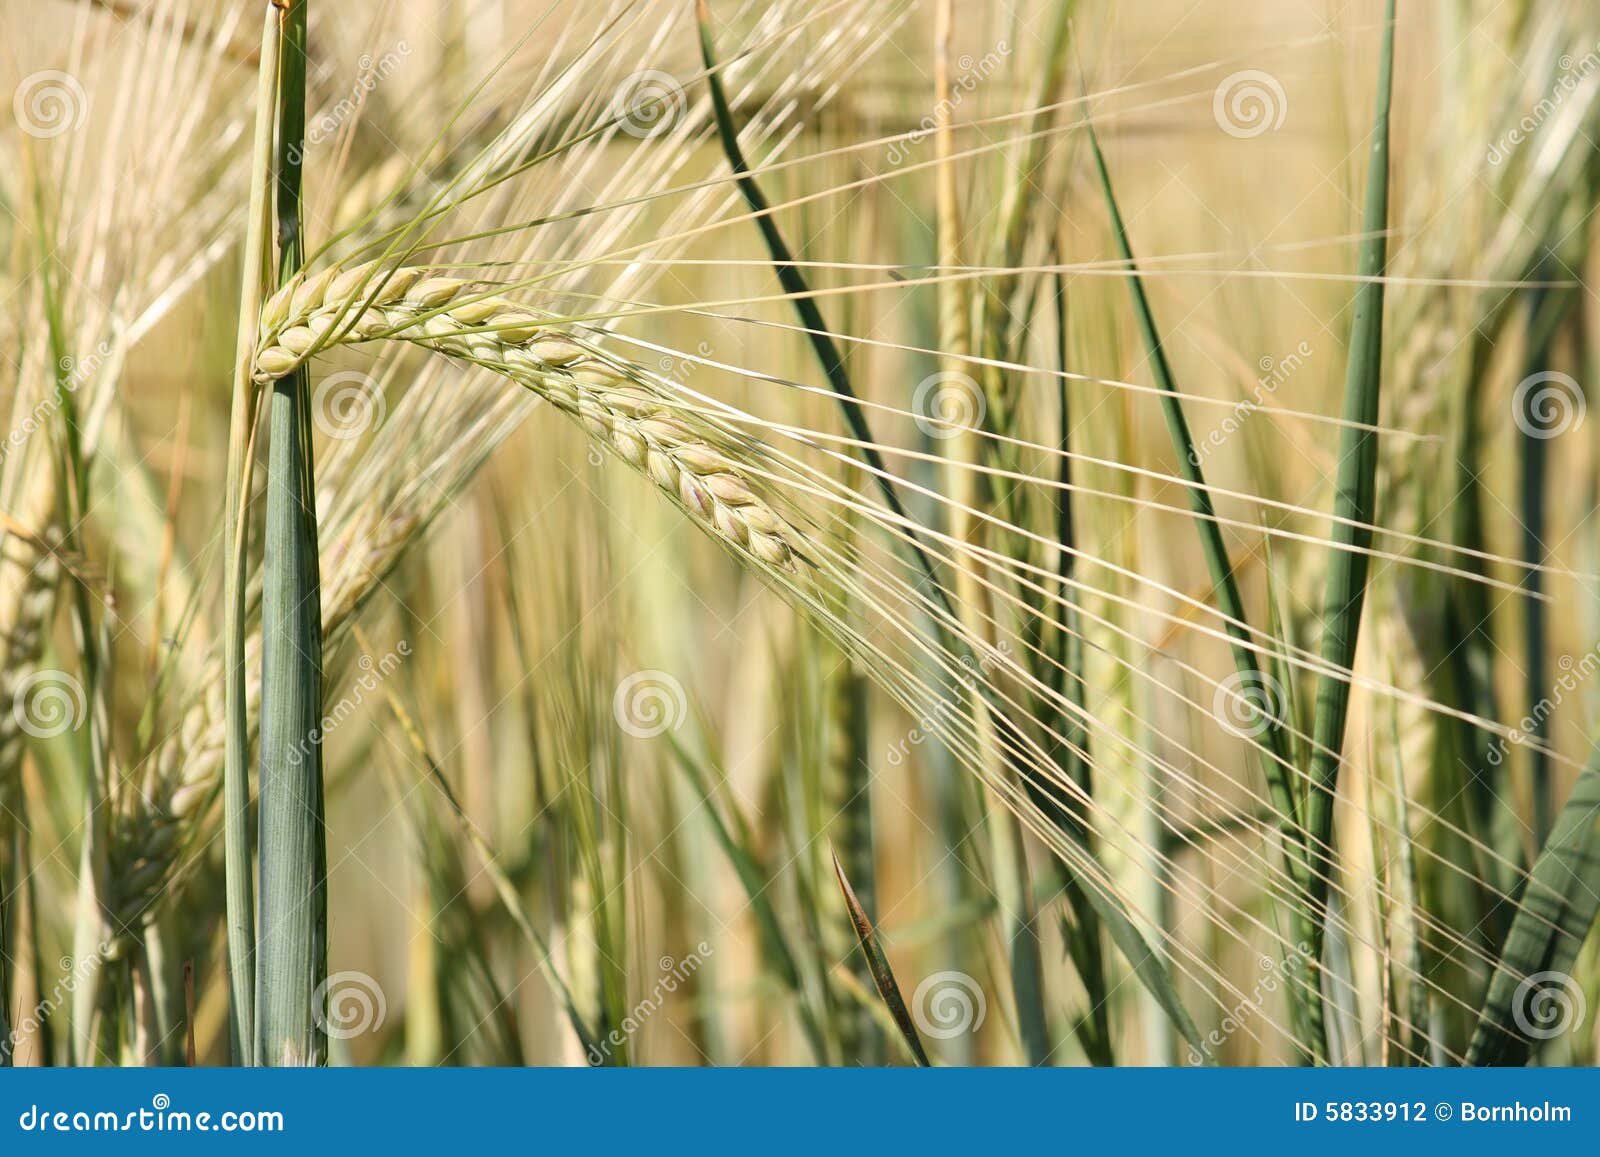 unripe barley